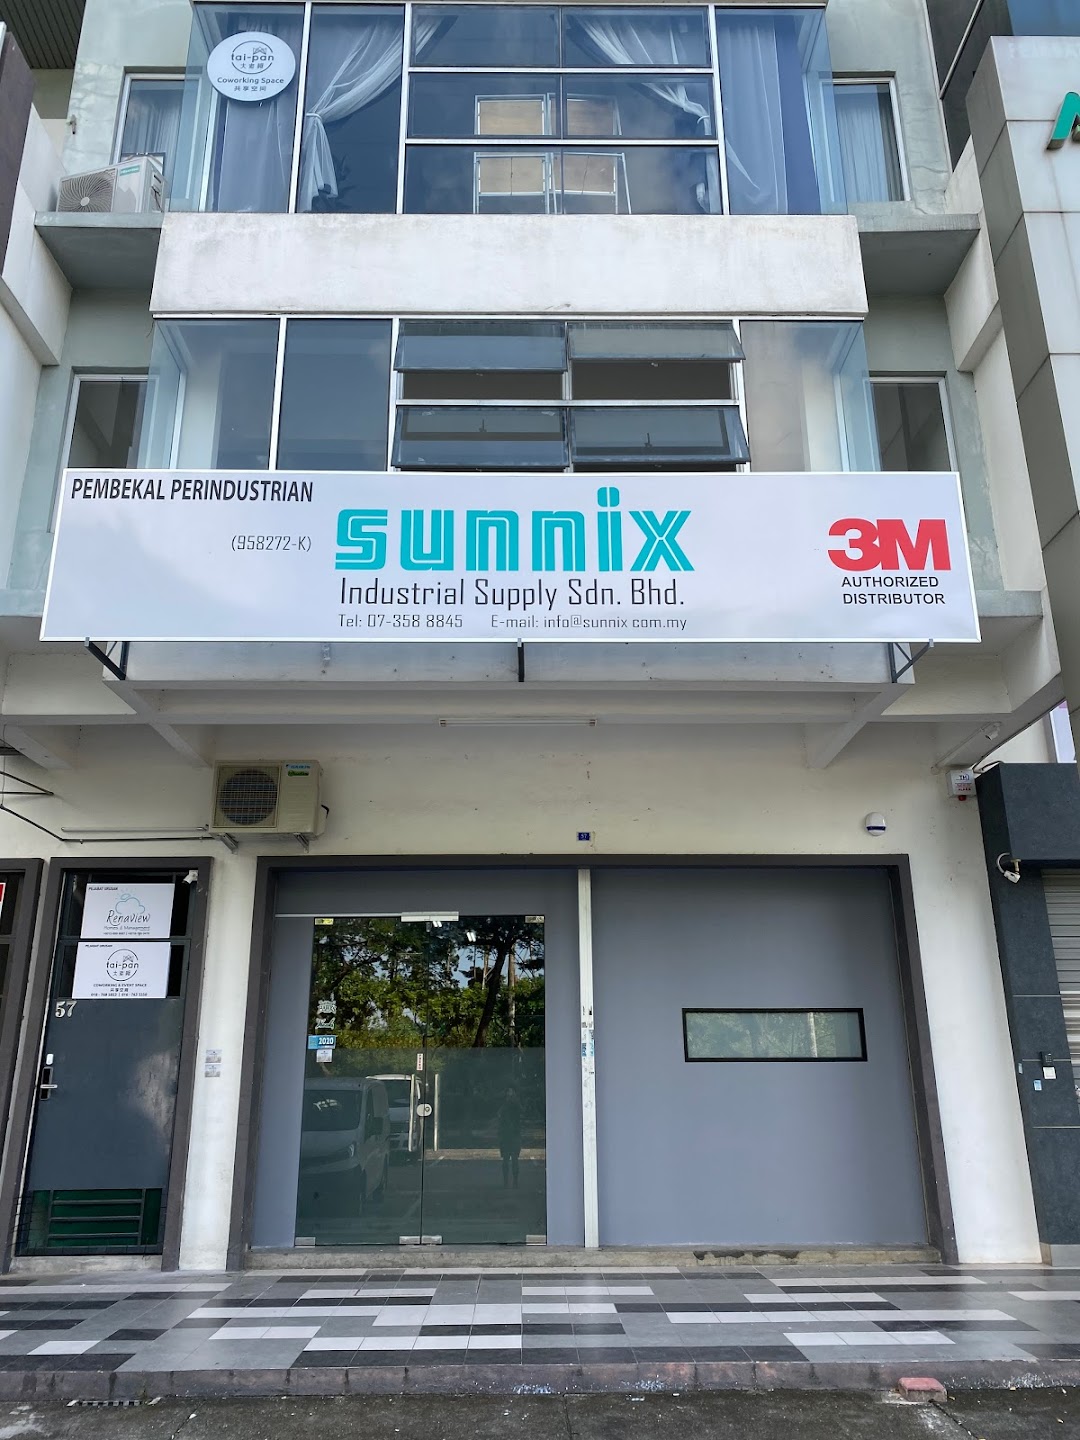 Sunnix Industrial Supply Sdn. Bhd.